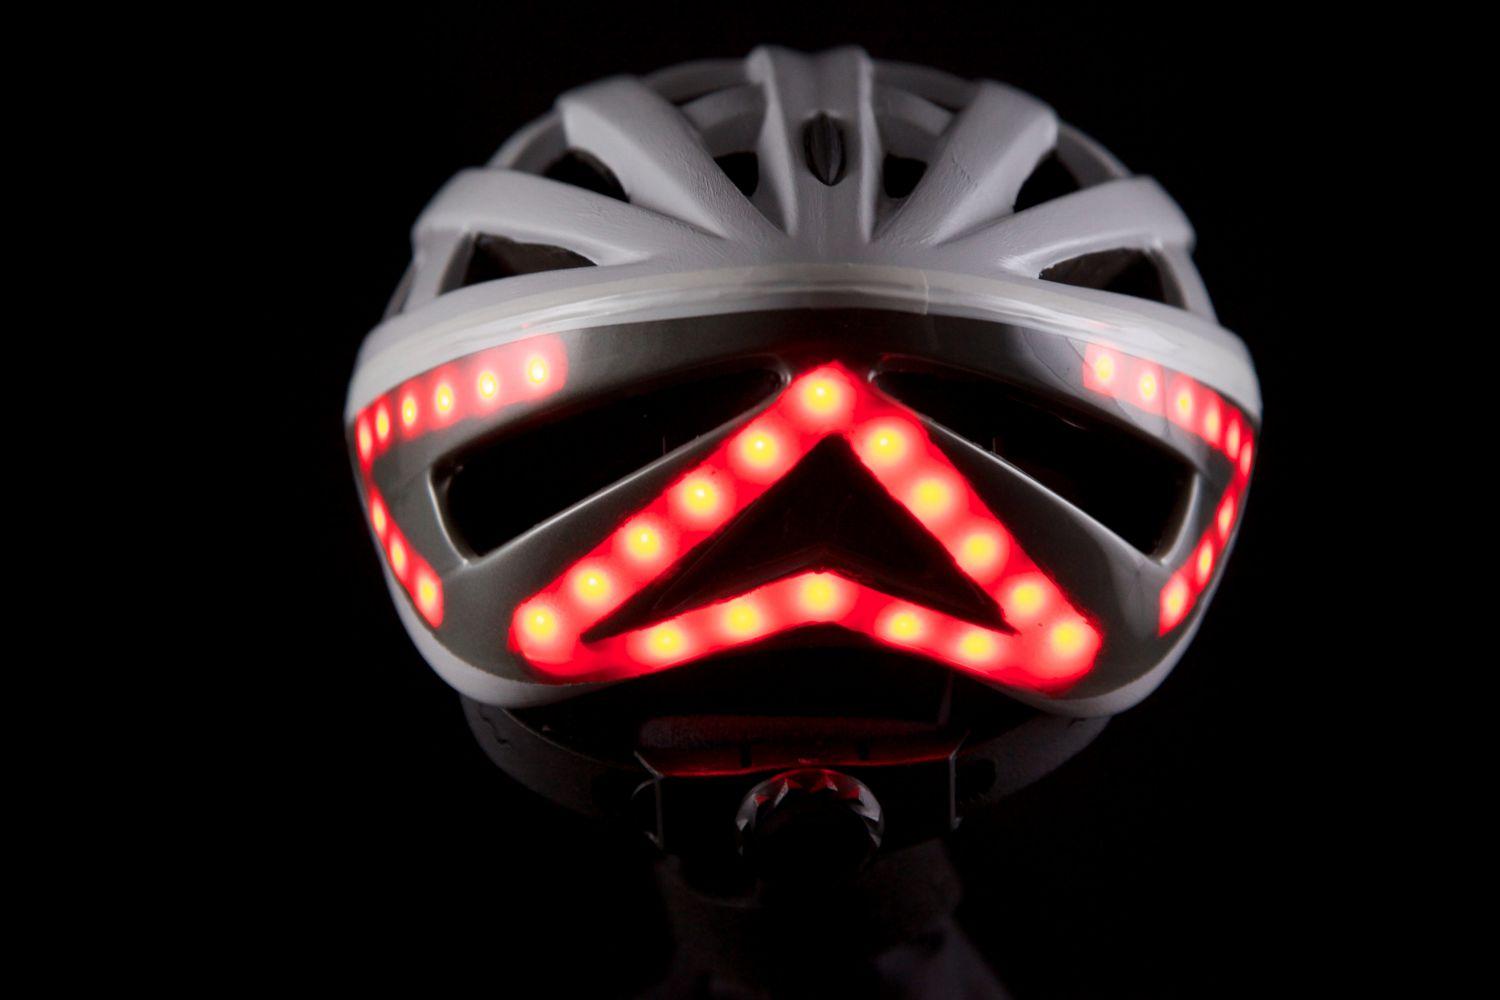 Lumos bike helmet lights